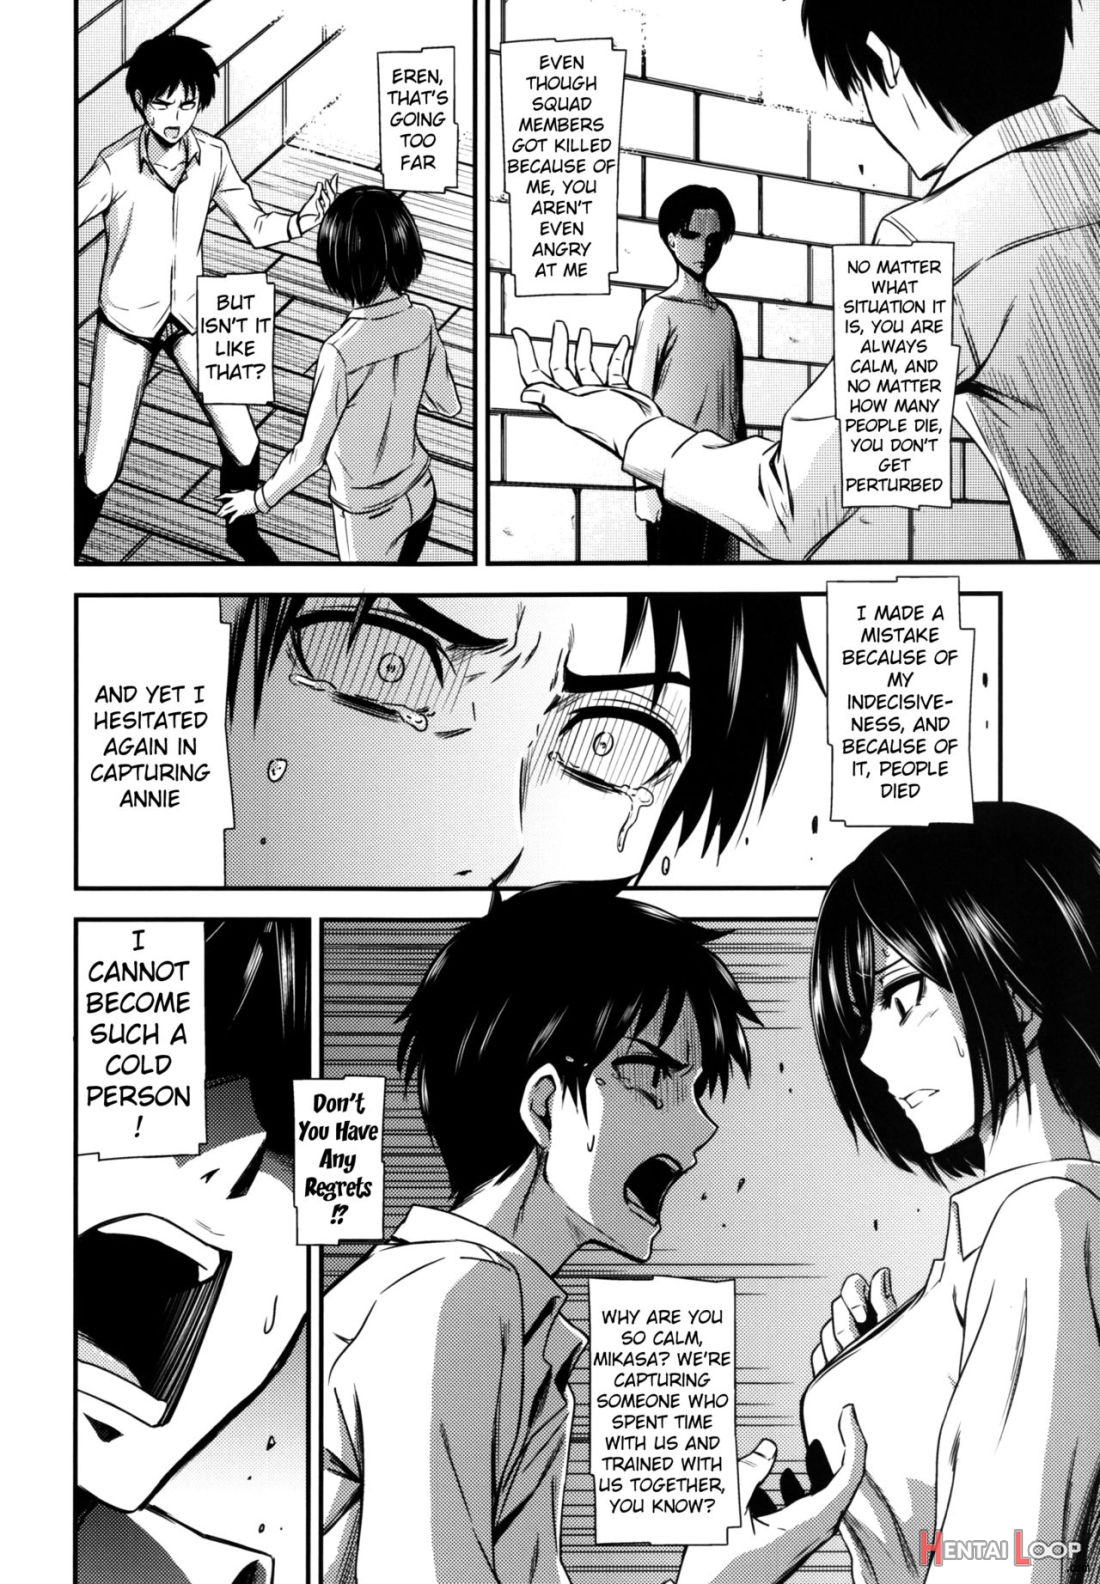 Gekishin San page 6